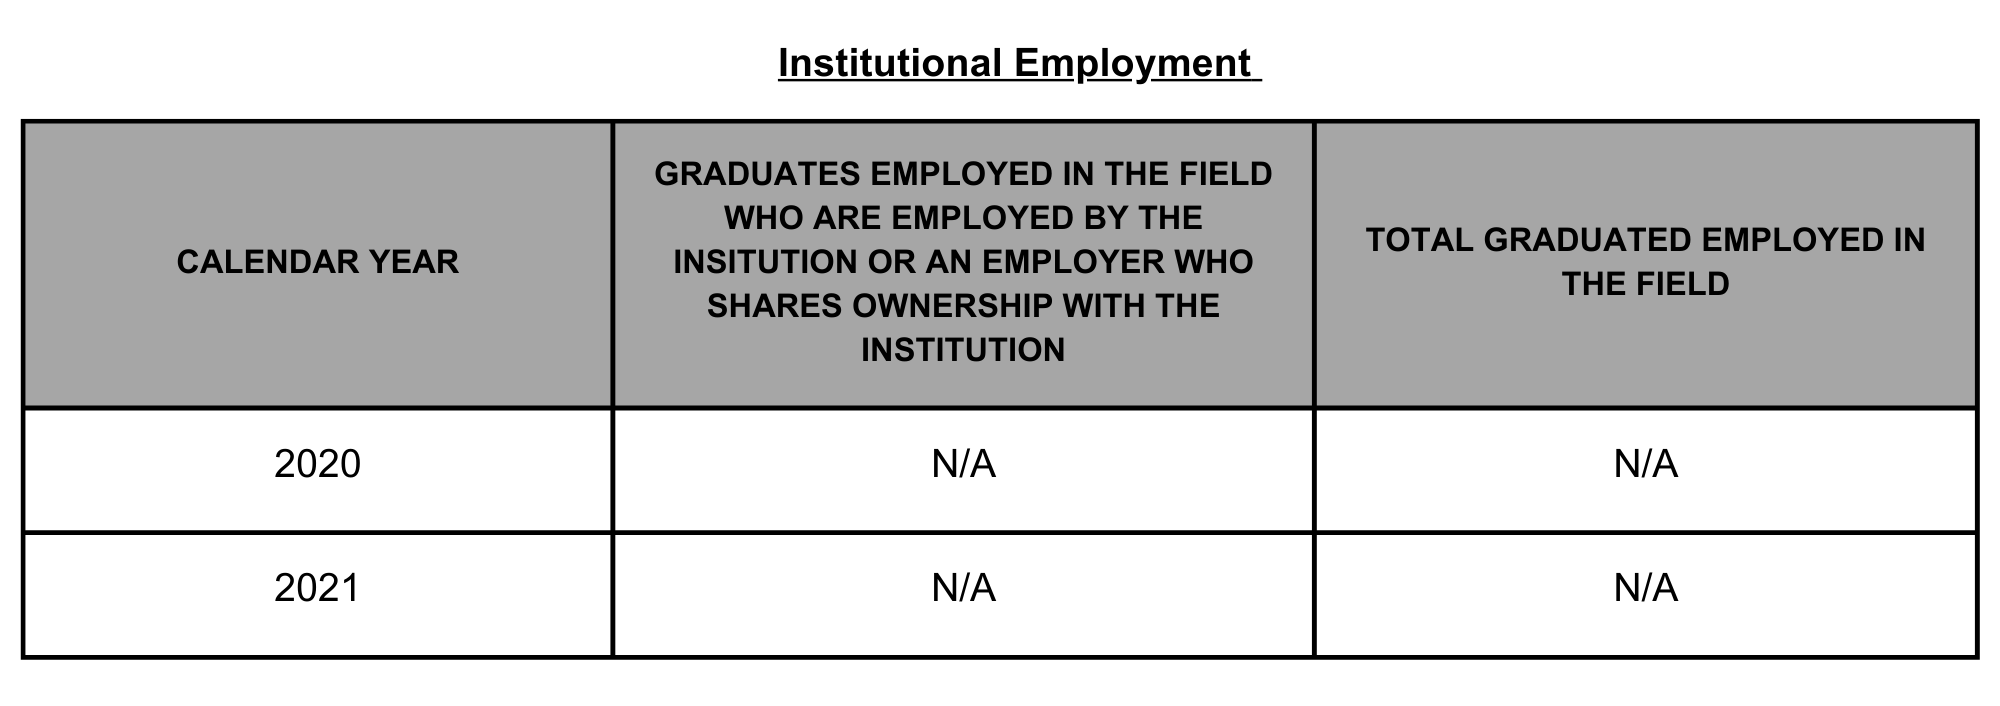 06 SPFS Institutional Employment LVL 1 PIF OL CA